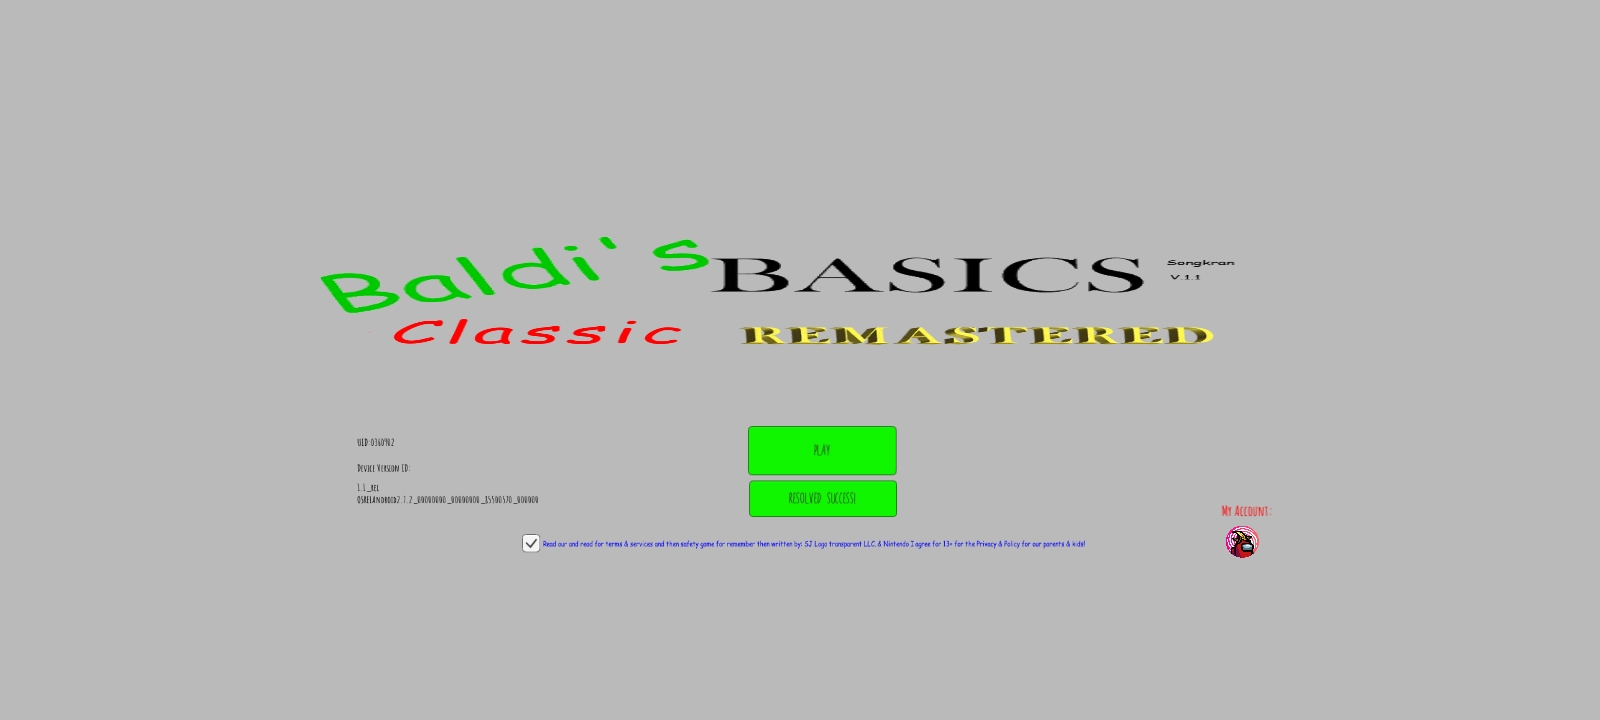 WE BEAT CLASSIC MODE! Baldi's Basics Classic Remastered! 